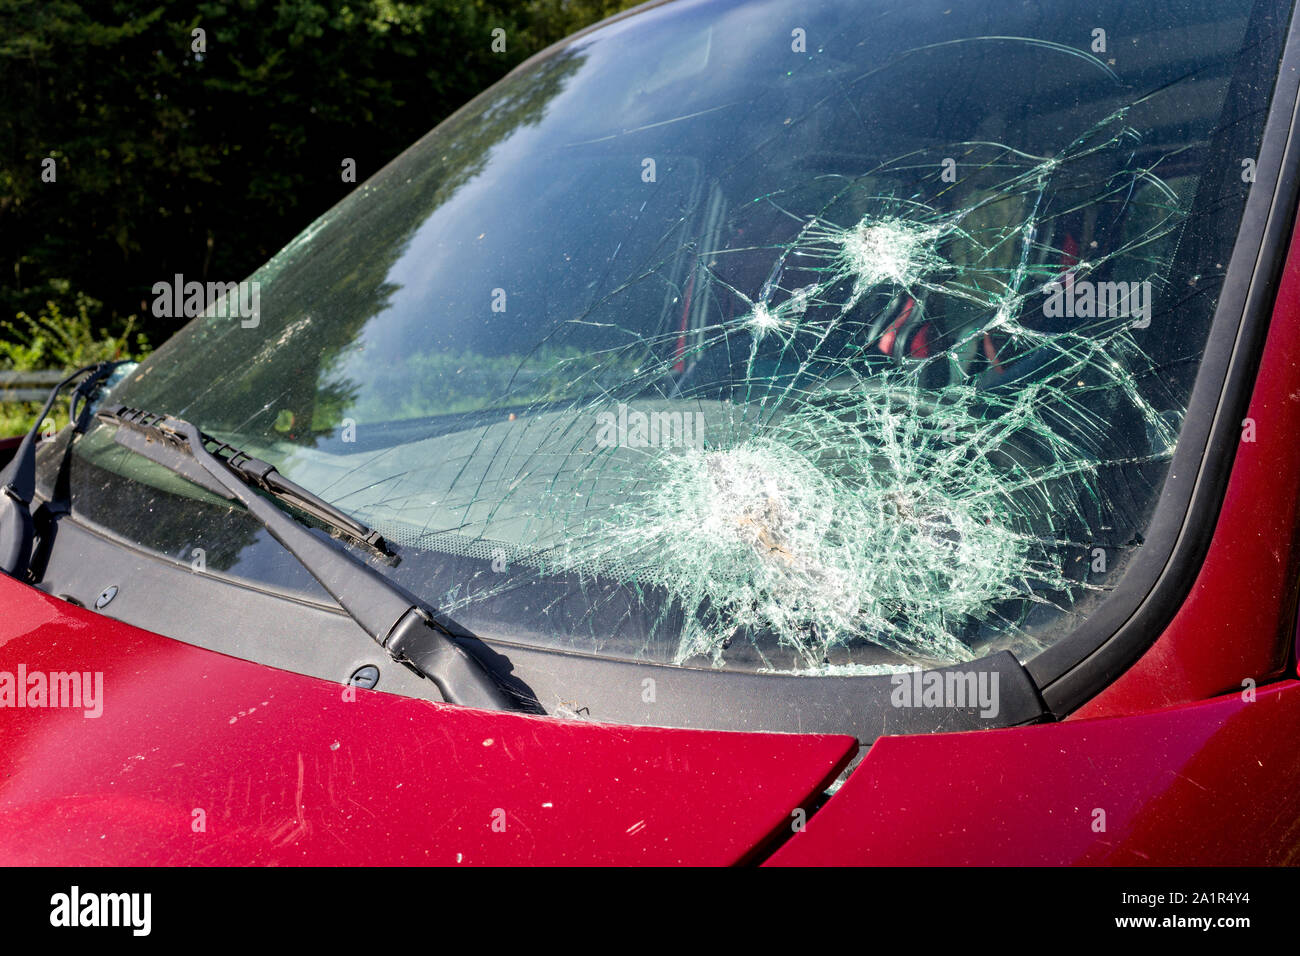 accident damaged windshild of a car Stock Photo